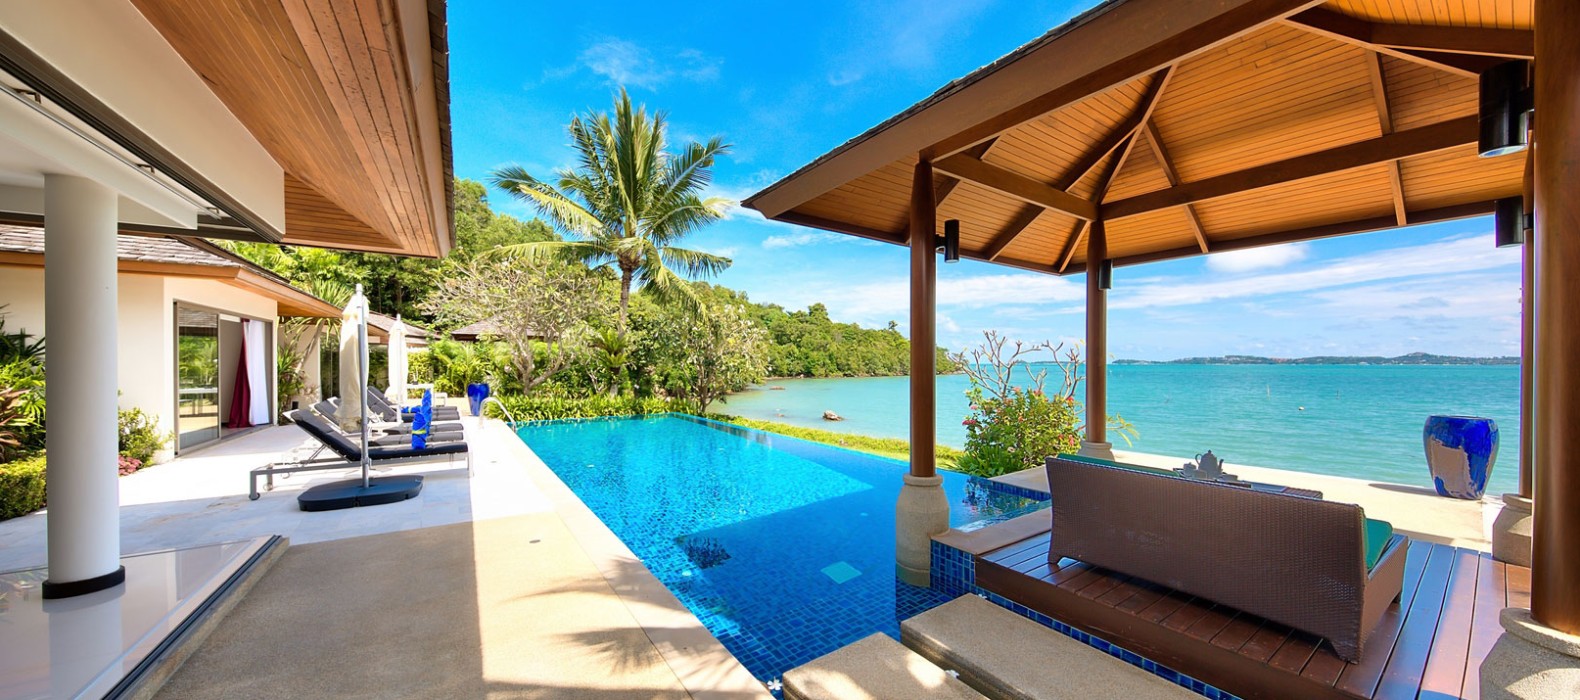 Exterior pool area of Villa Beautiful Life in Koh Samui